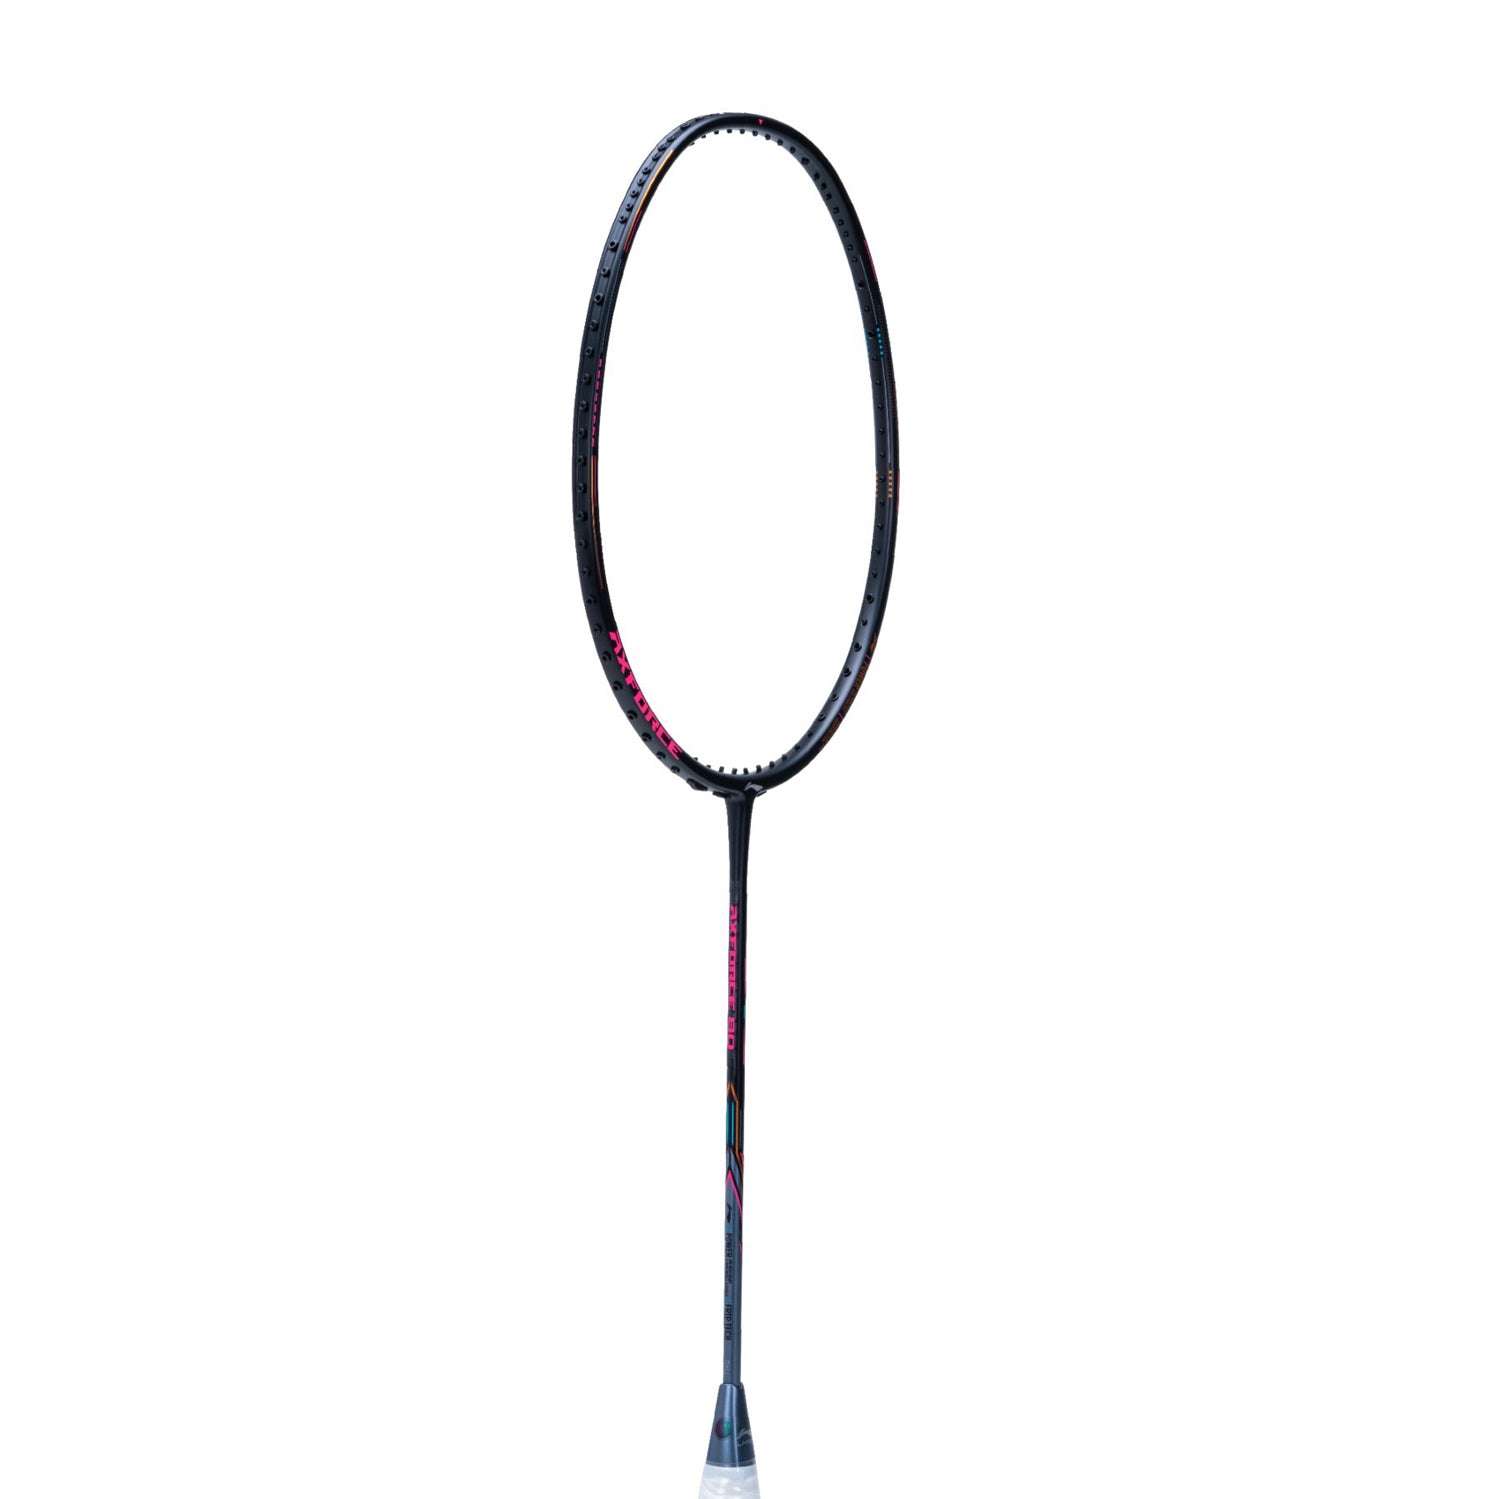 Li-Ning AXFORCE 80 3U Unstrung Professional Badminton Racquet - Grey - Best Price online Prokicksports.com